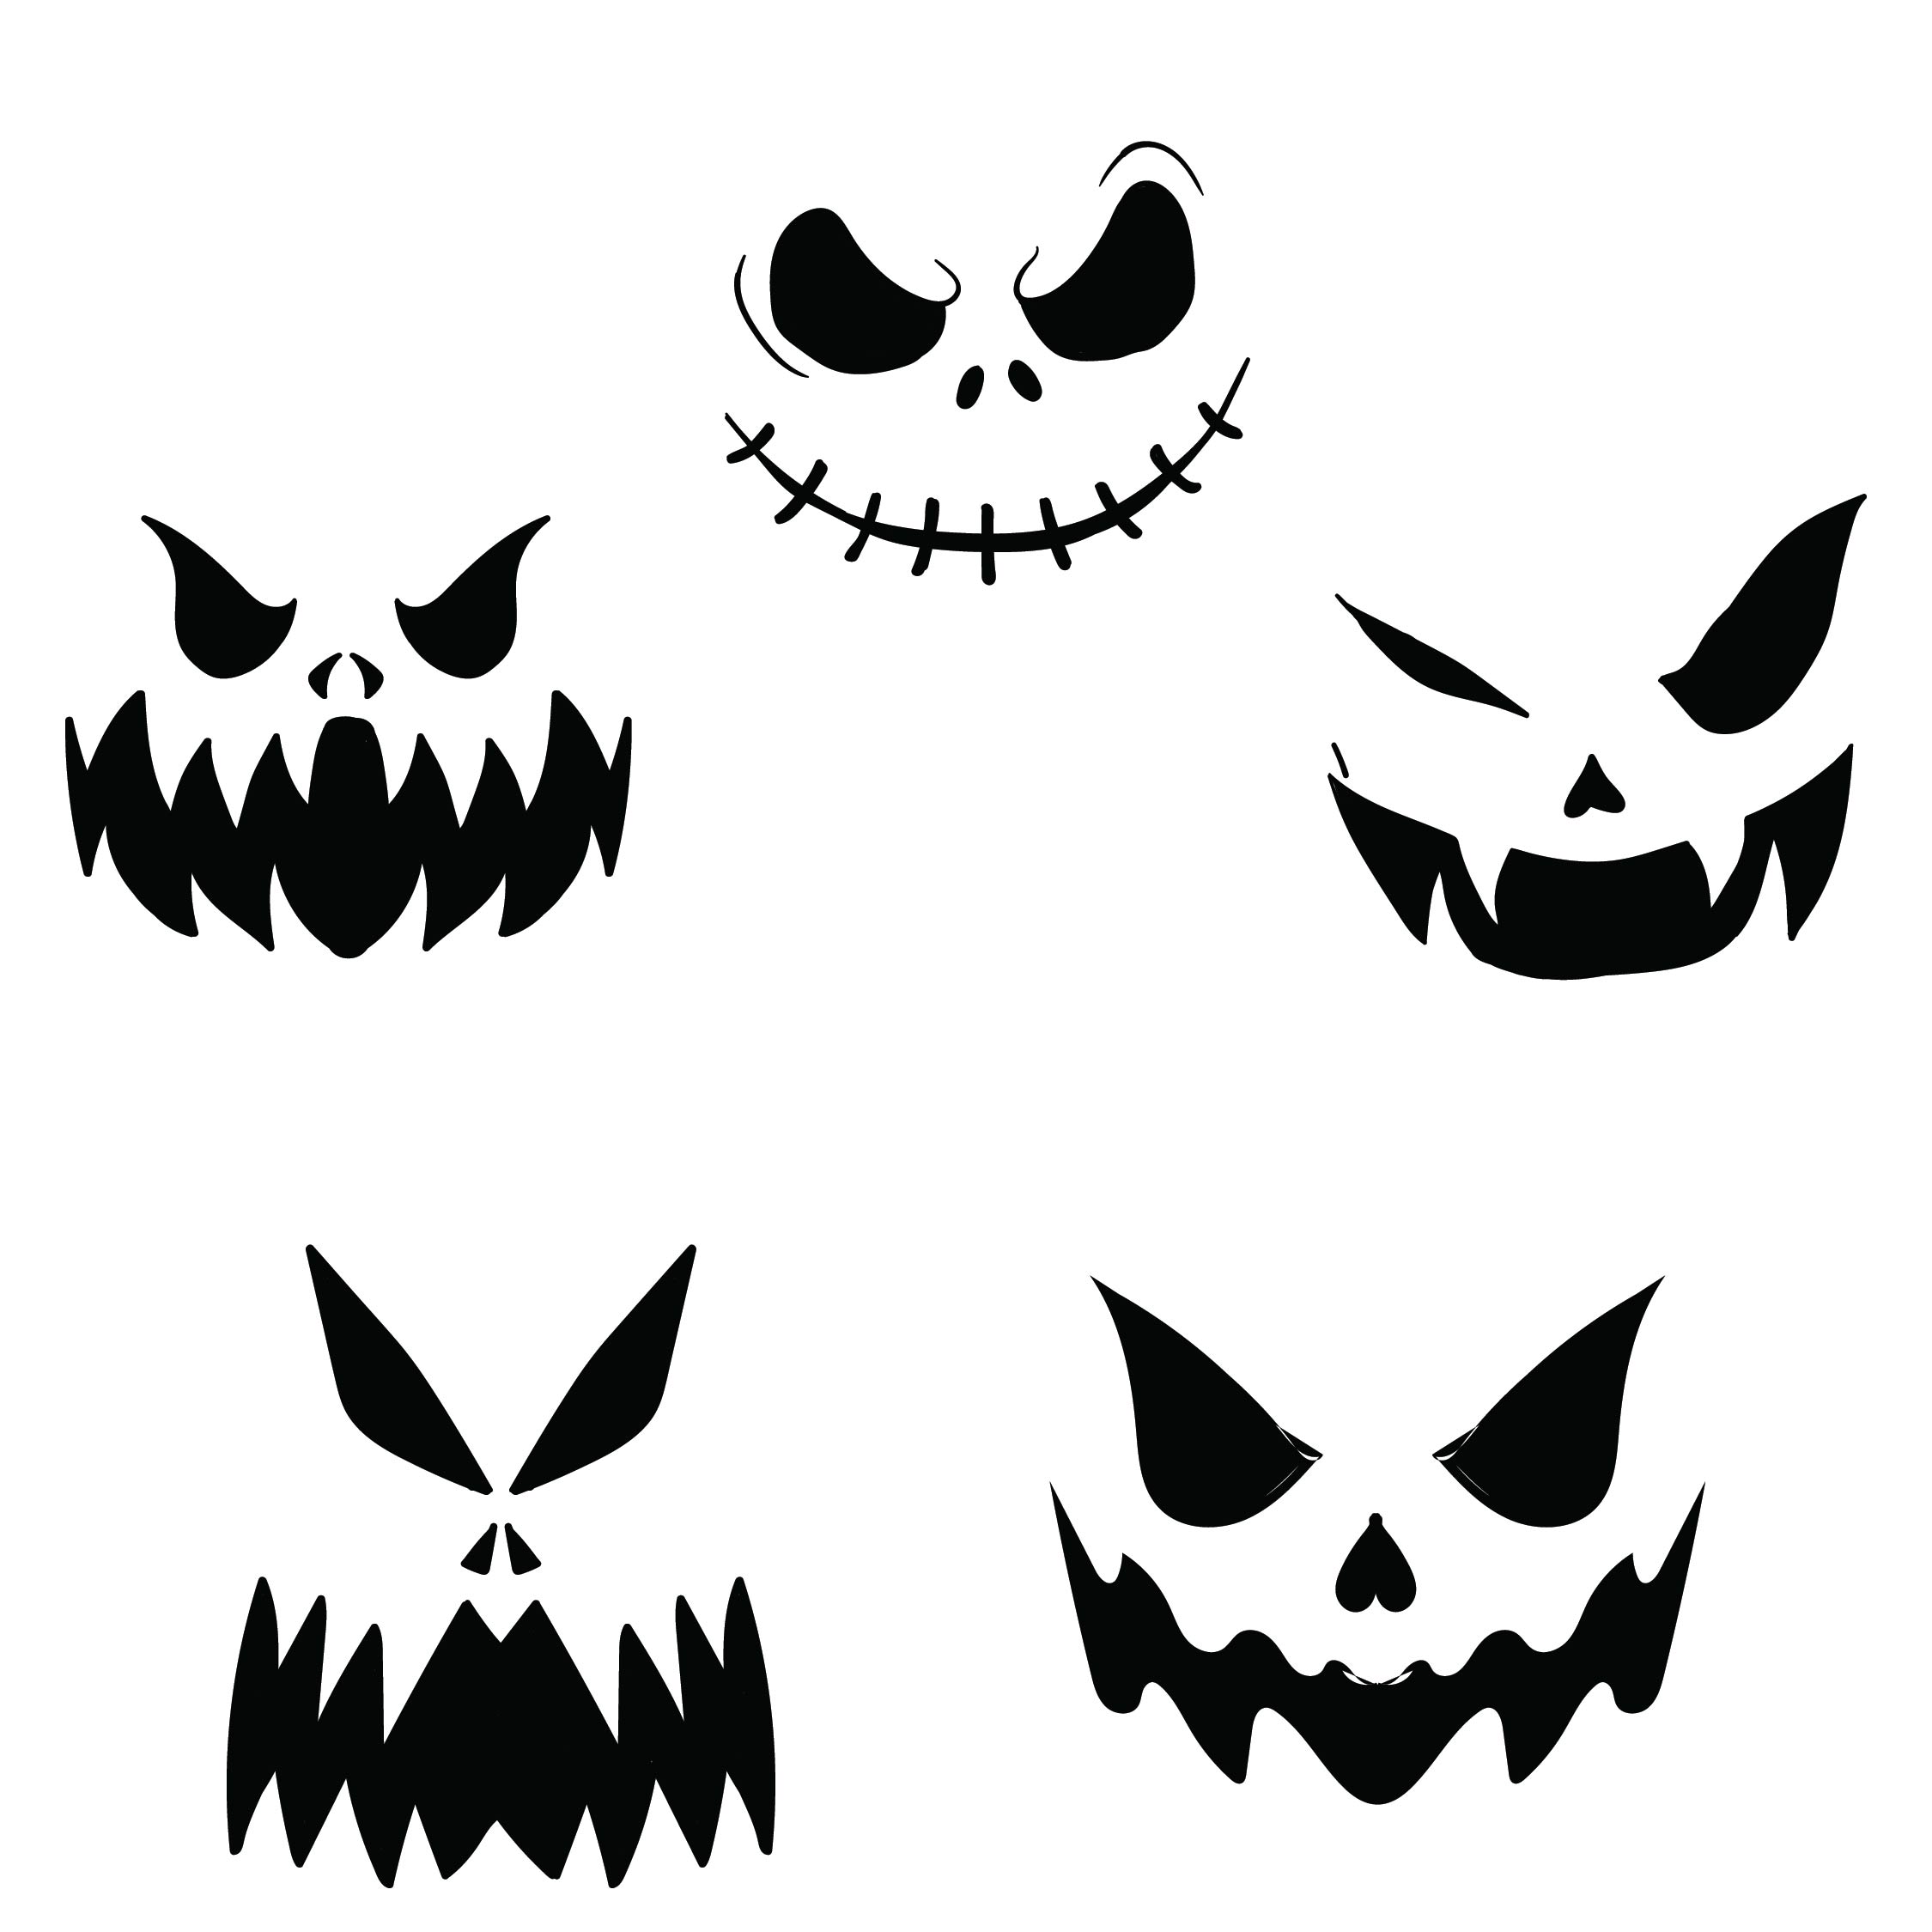 6 Best Images of Free Printable Pumpkin Stencils Halloween - Free ...